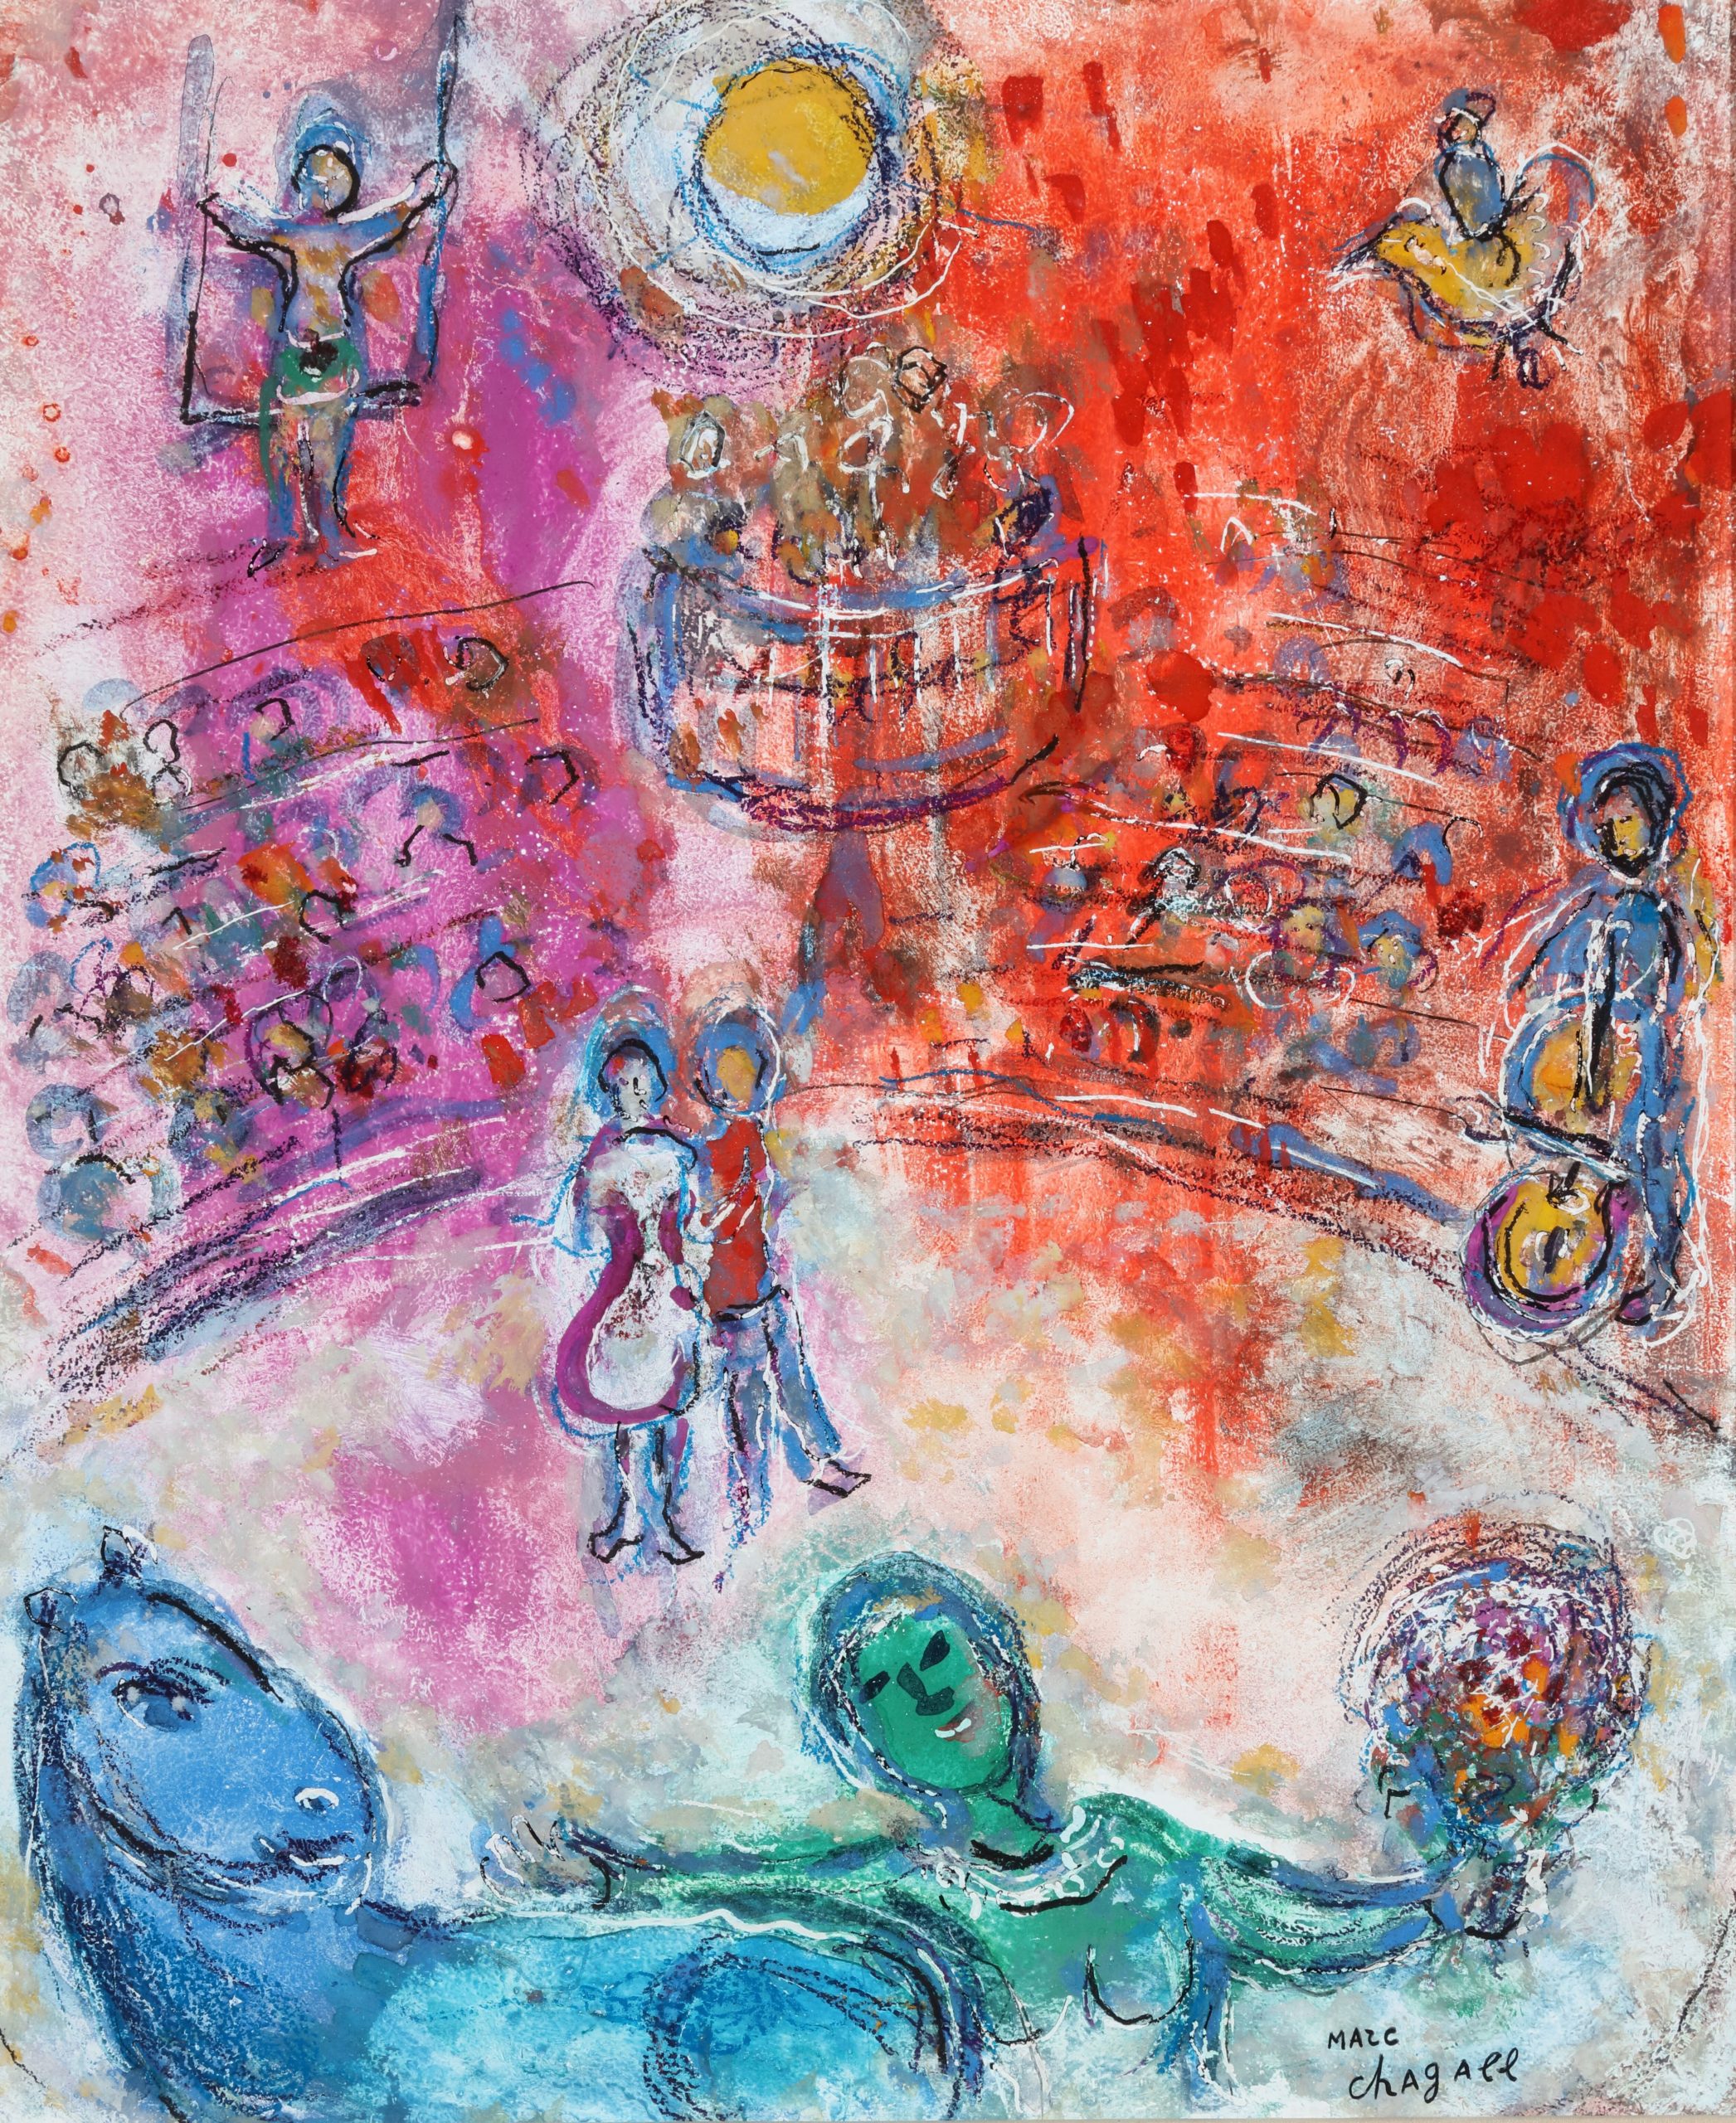 Ecuyère au cirque ensoleillé, a painting by Marc Chagall